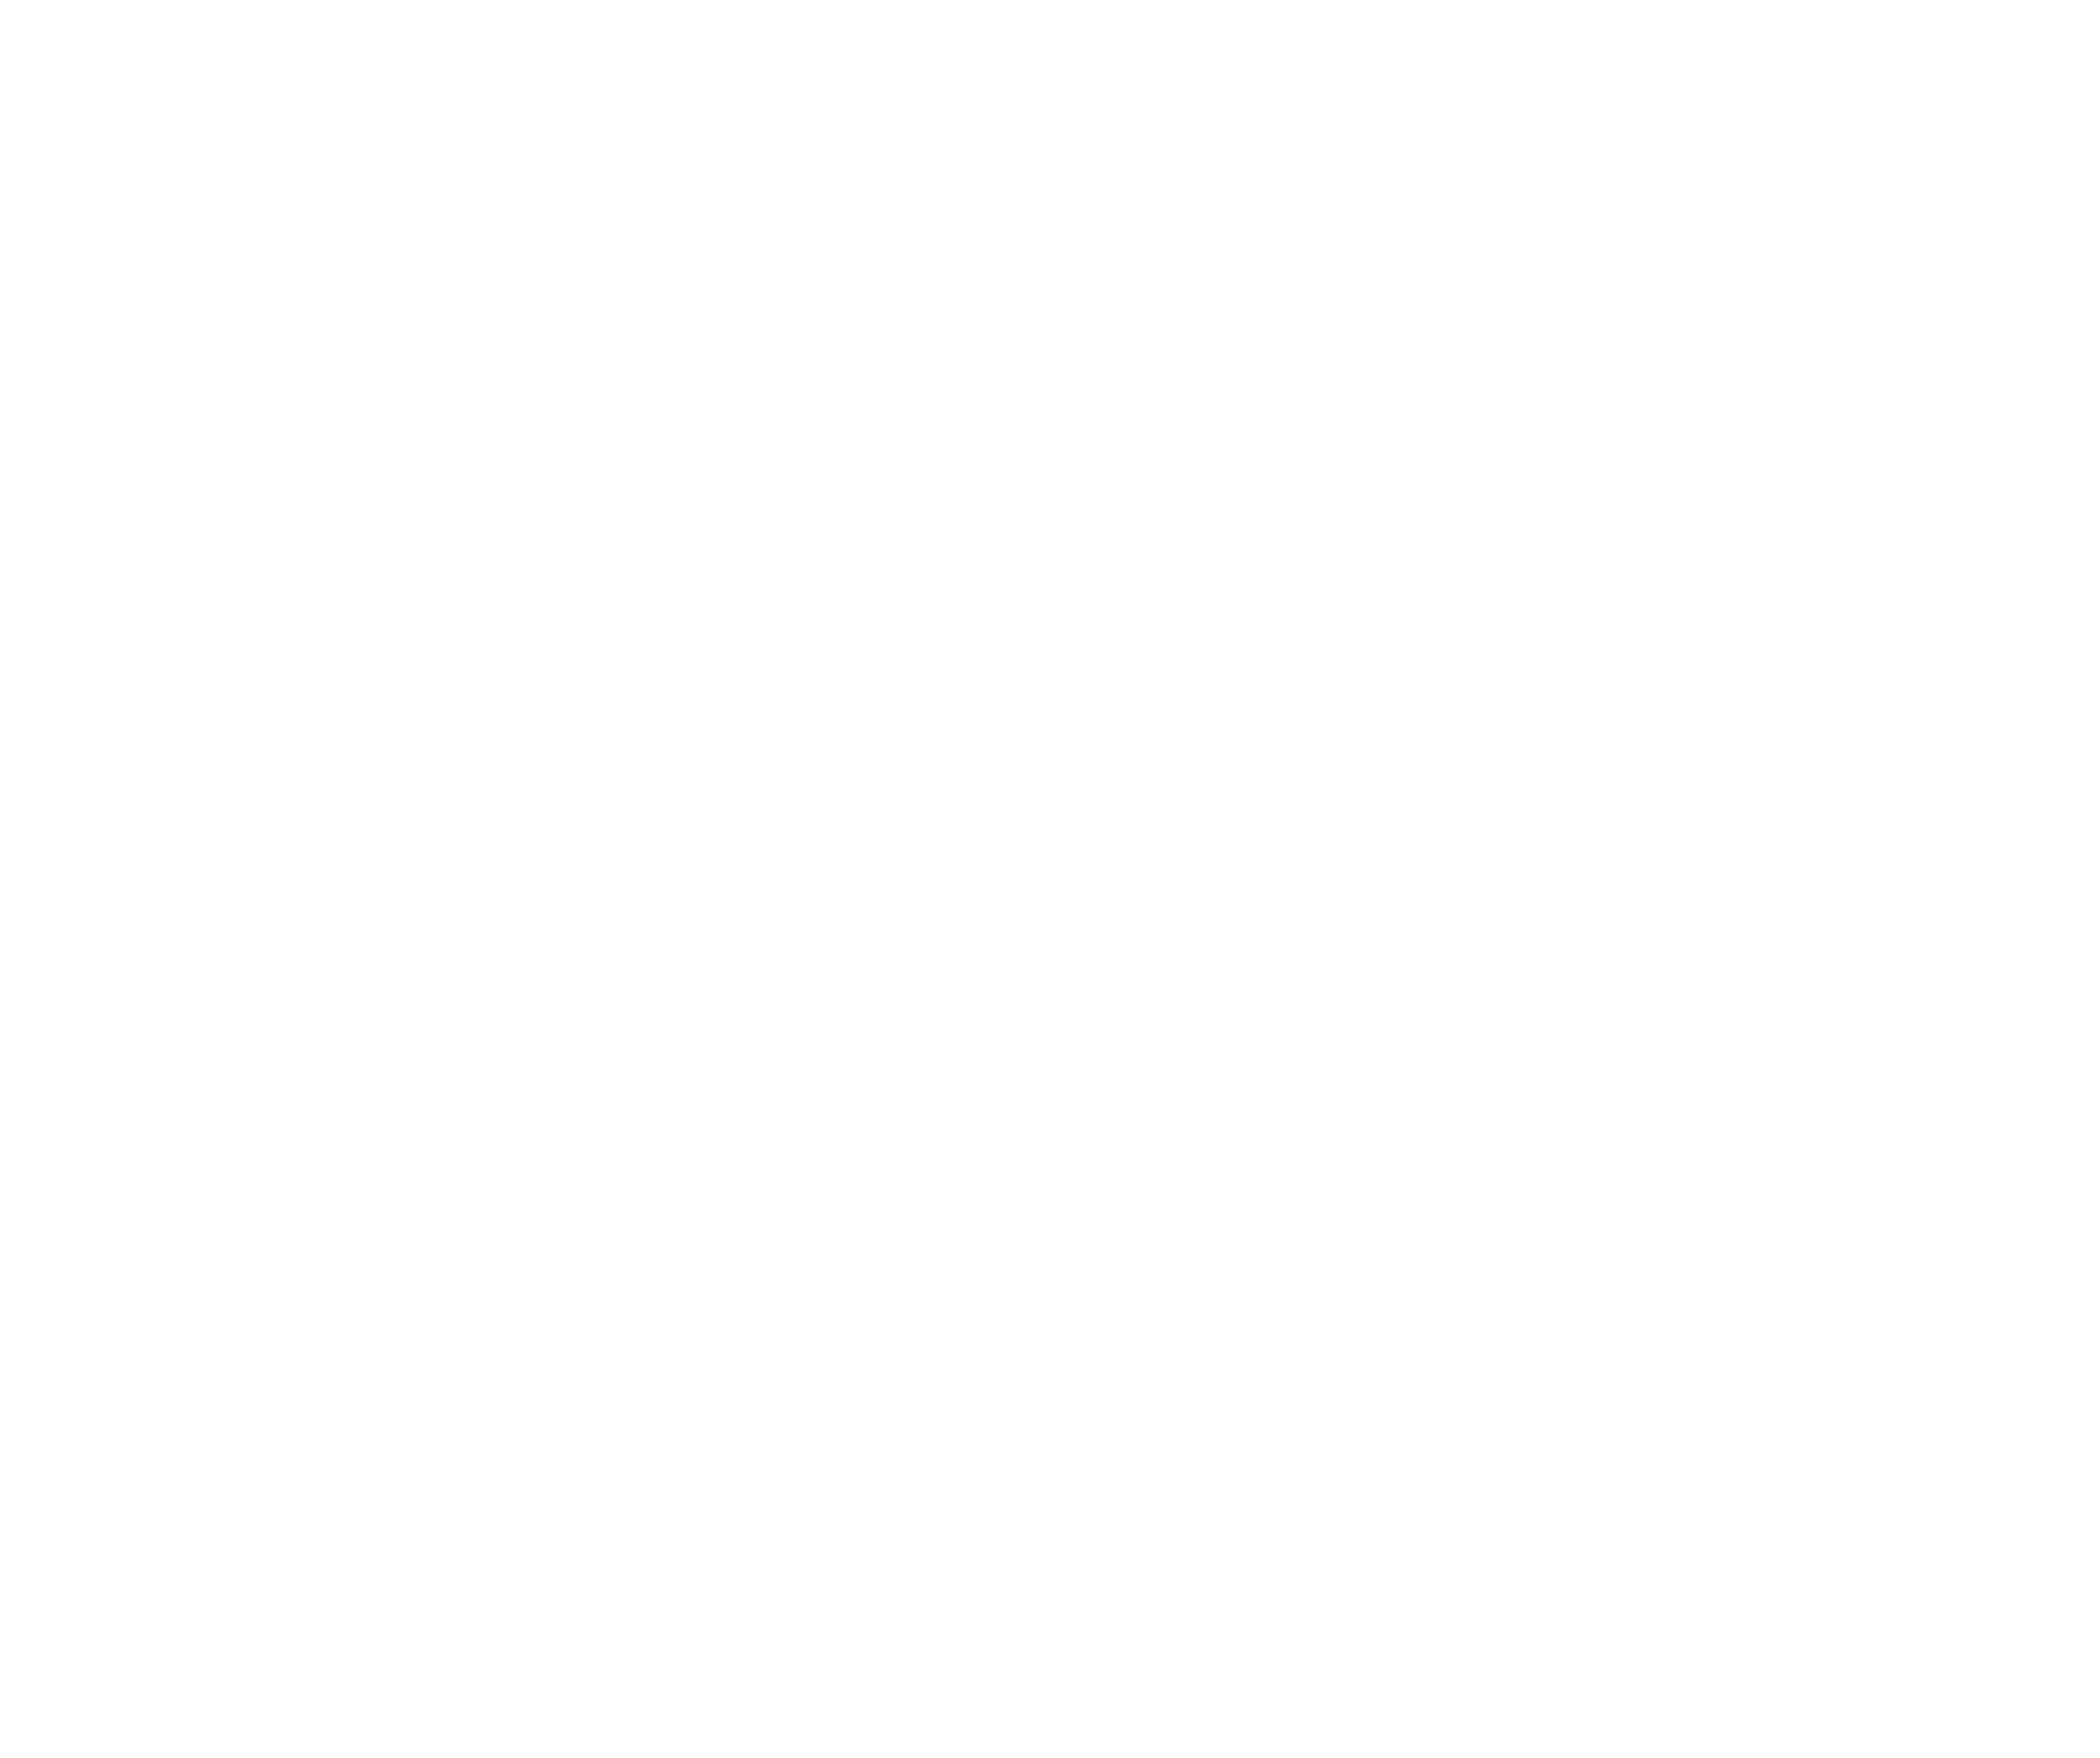 His D. Light